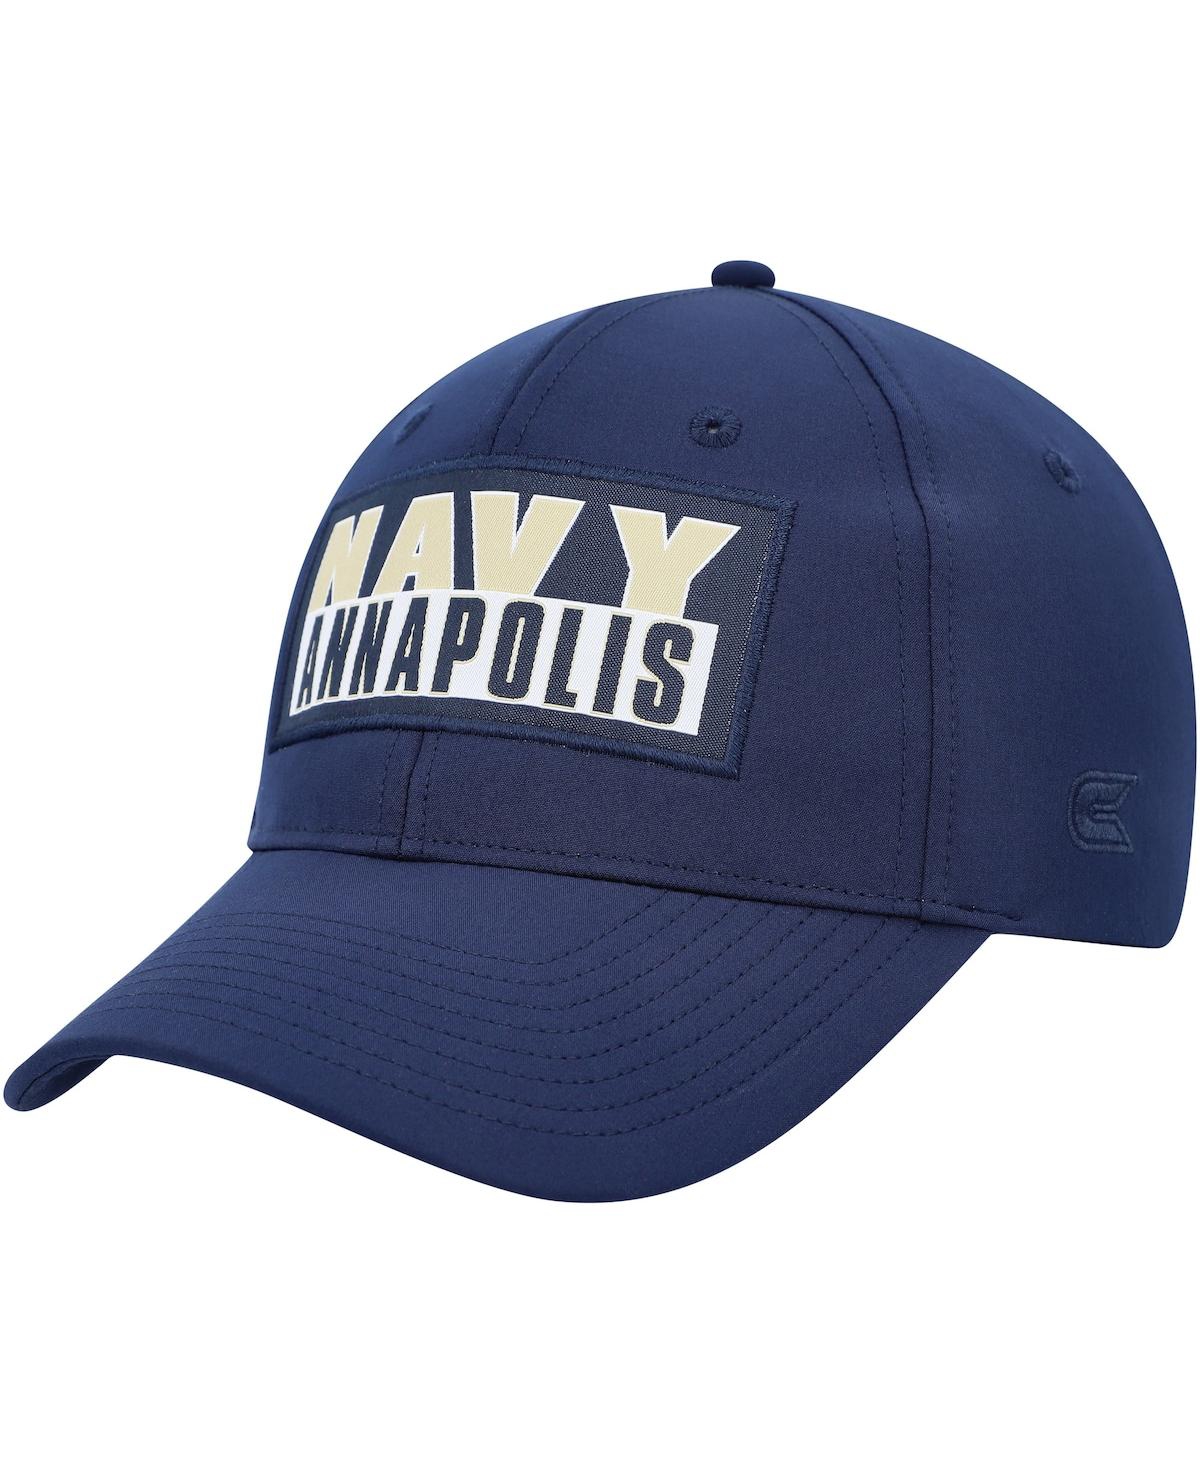 Shop Colosseum Men's  Navy Navy Midshipmen Positraction Snapback Hat